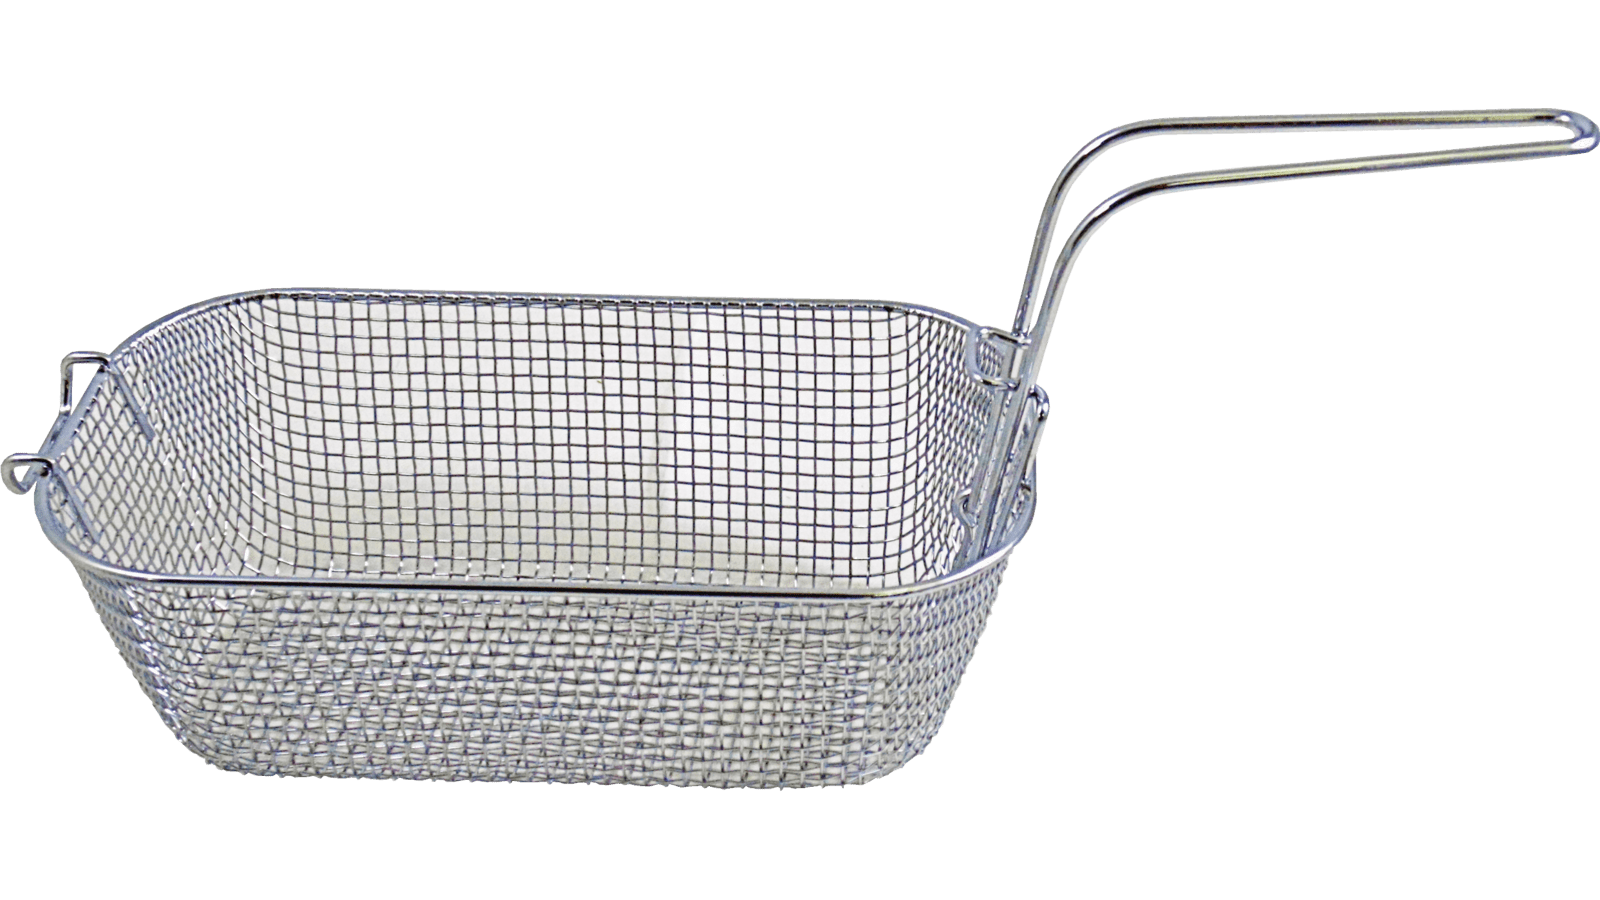 00743976 Deep Frying Basket